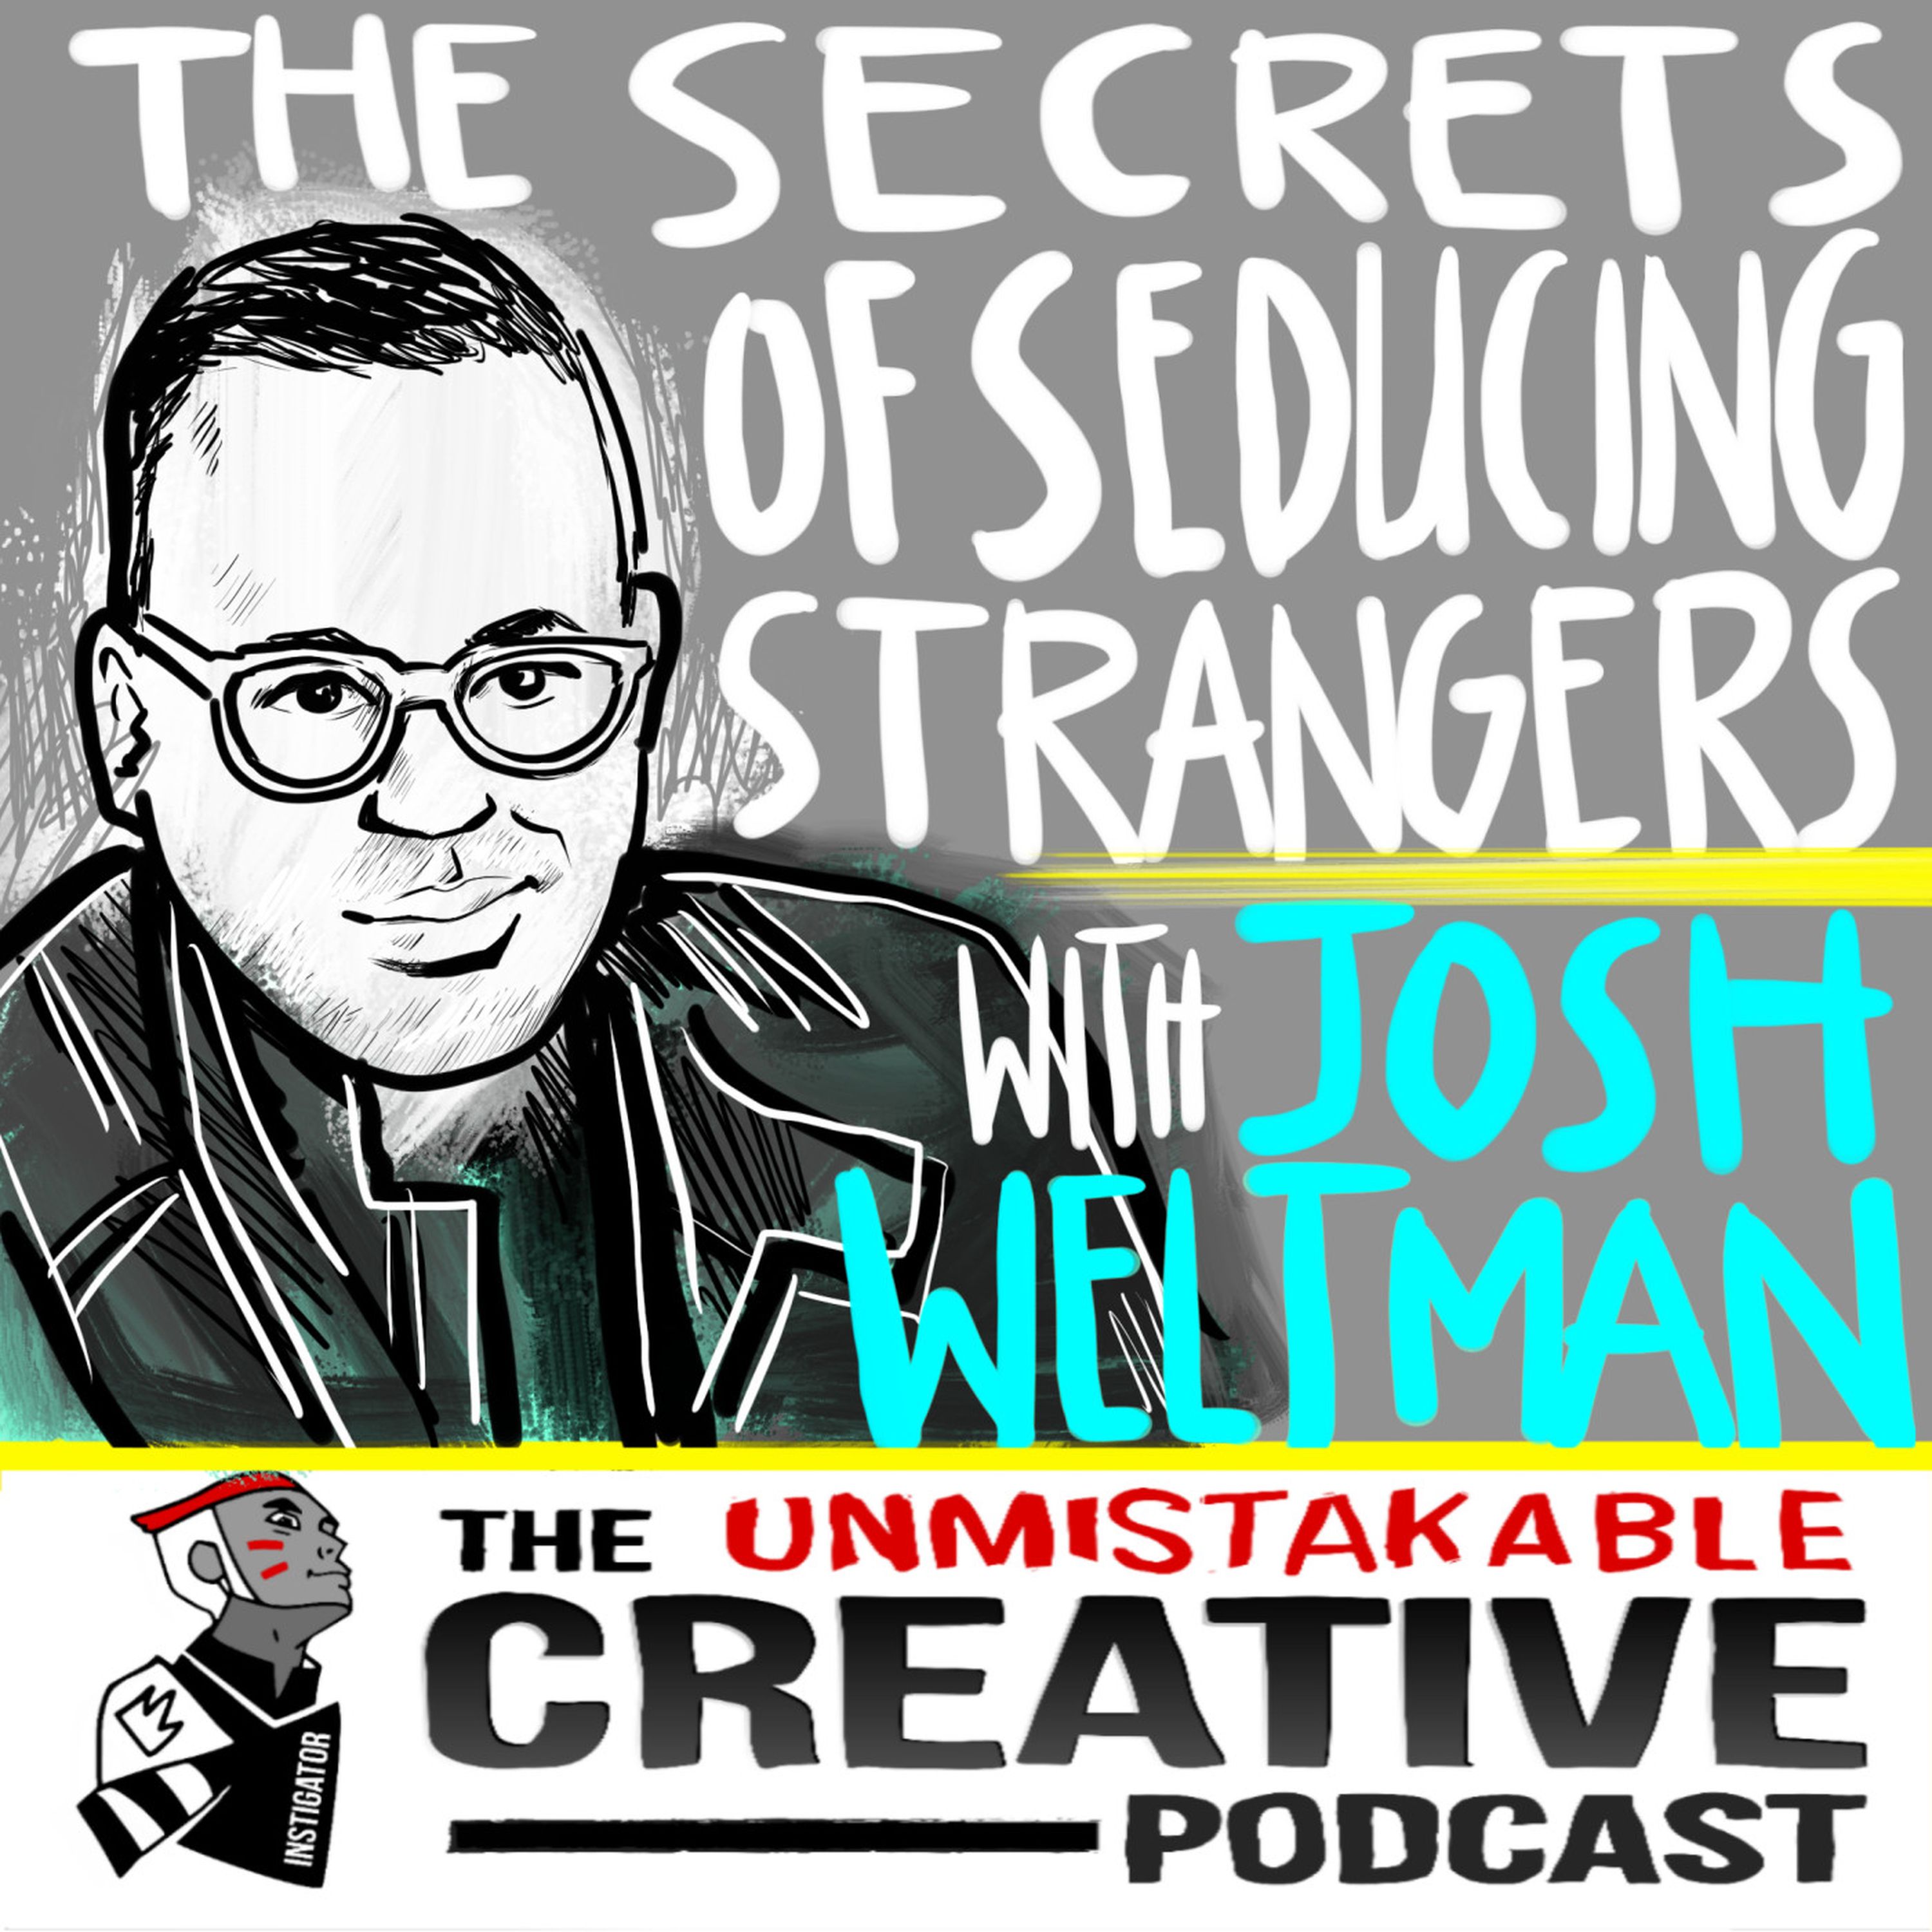 The Secrets of Seducing Strangers with Josh Weltman Image